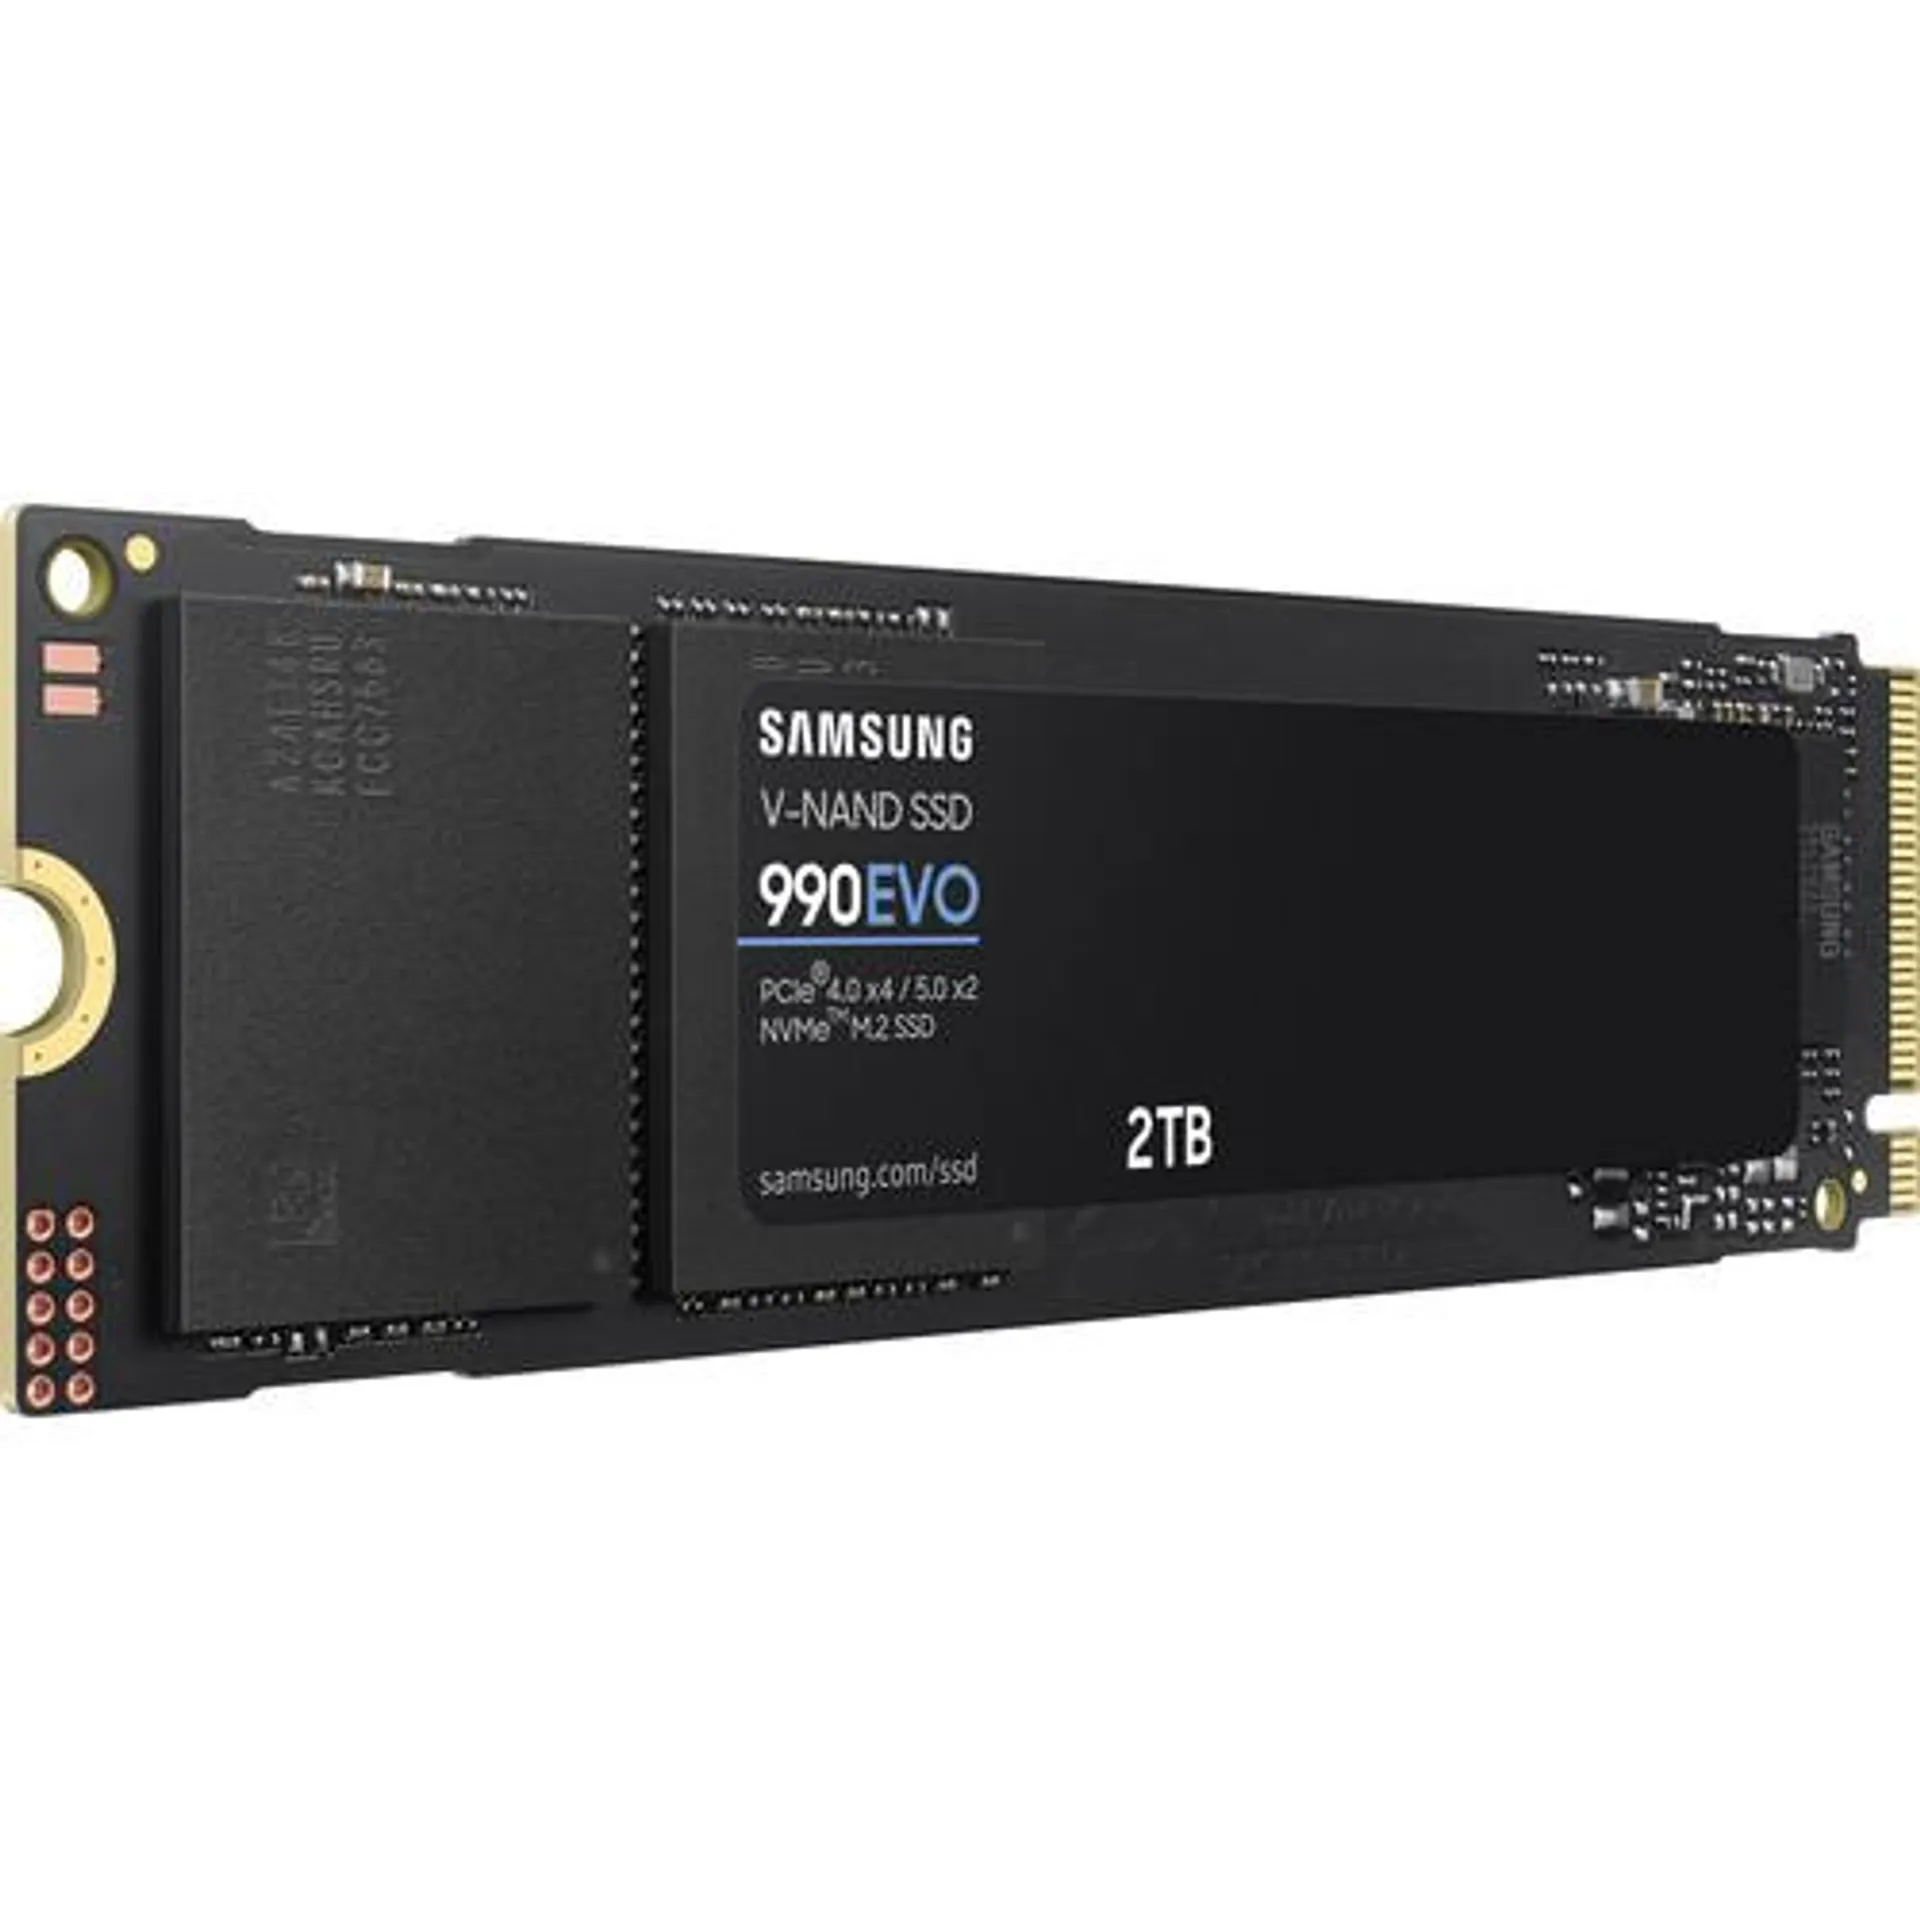 Samsung 2TB 990 EVO PCIe 4.0 x4 / 5.0 x2 M.2 Internal SSD